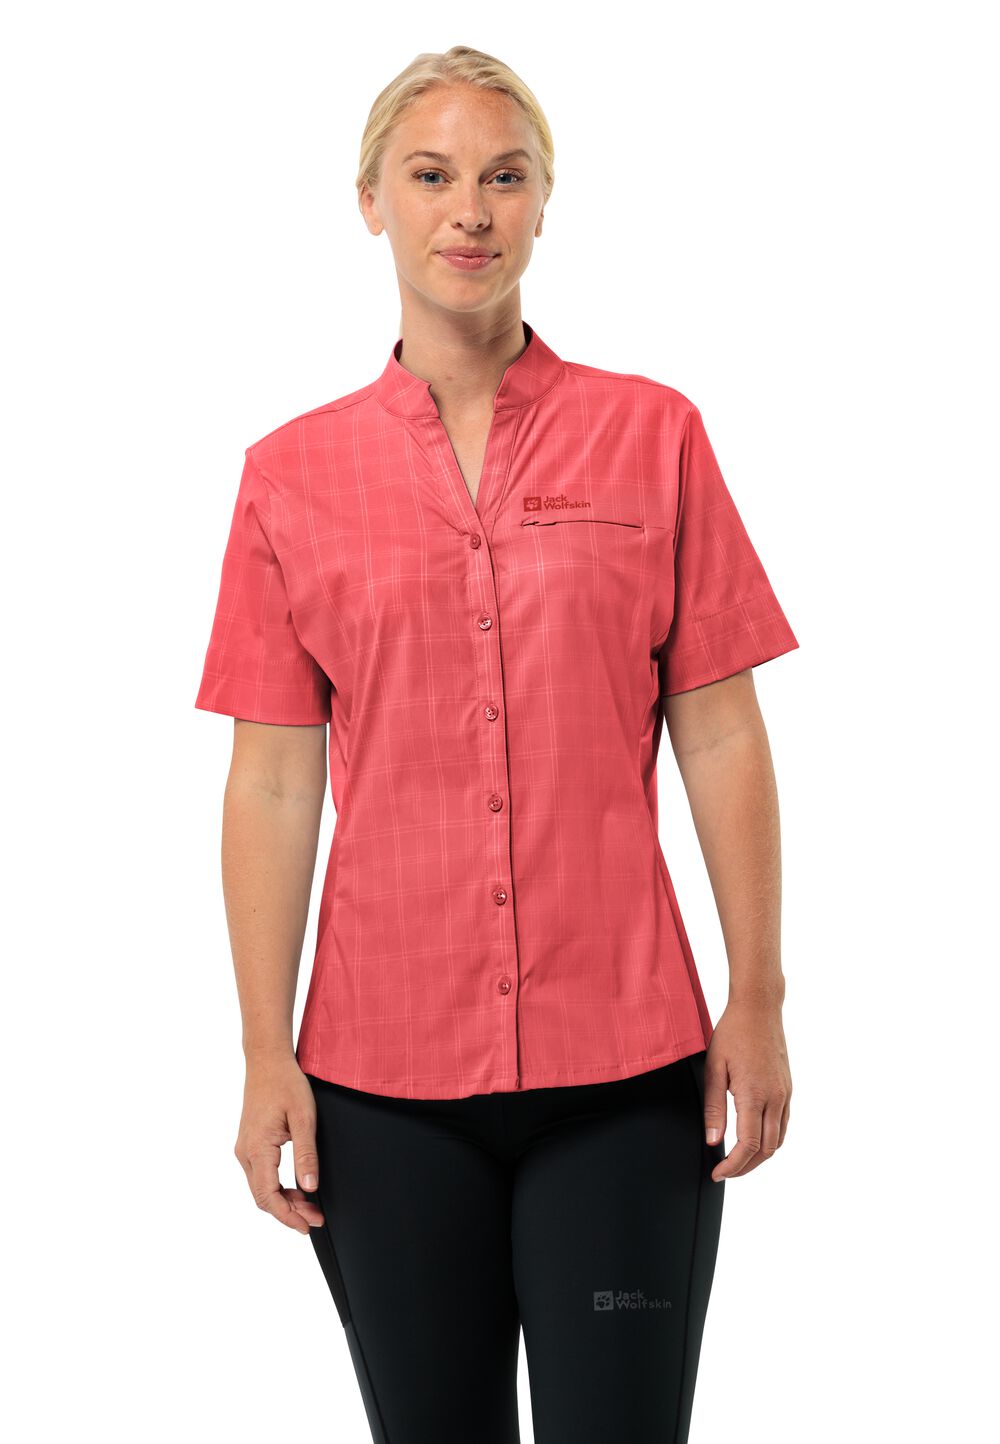 Jack Wolfskin Norbo S S Shirt Women Wandelblouse met korte mouwen Dames XL rood vibrant red check